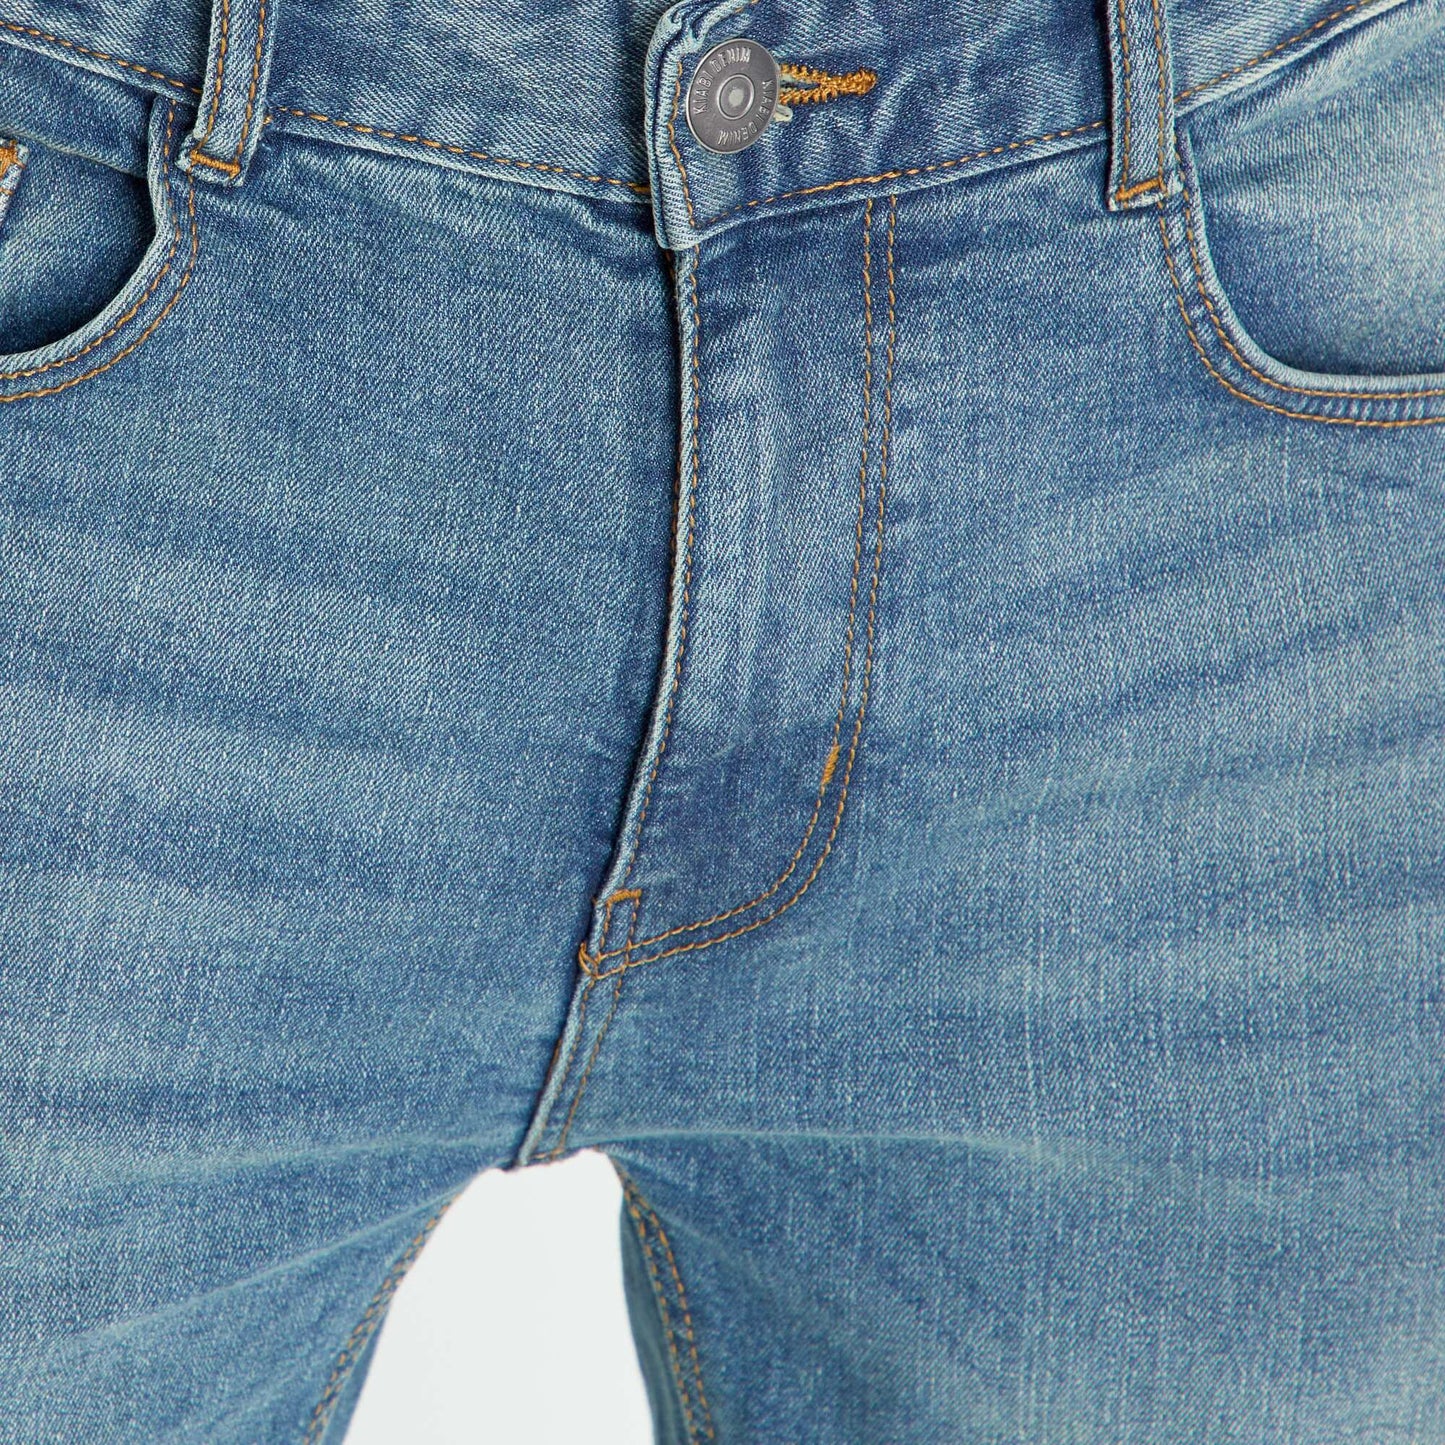 Stretch skinny jeans - 5 pockets stone used